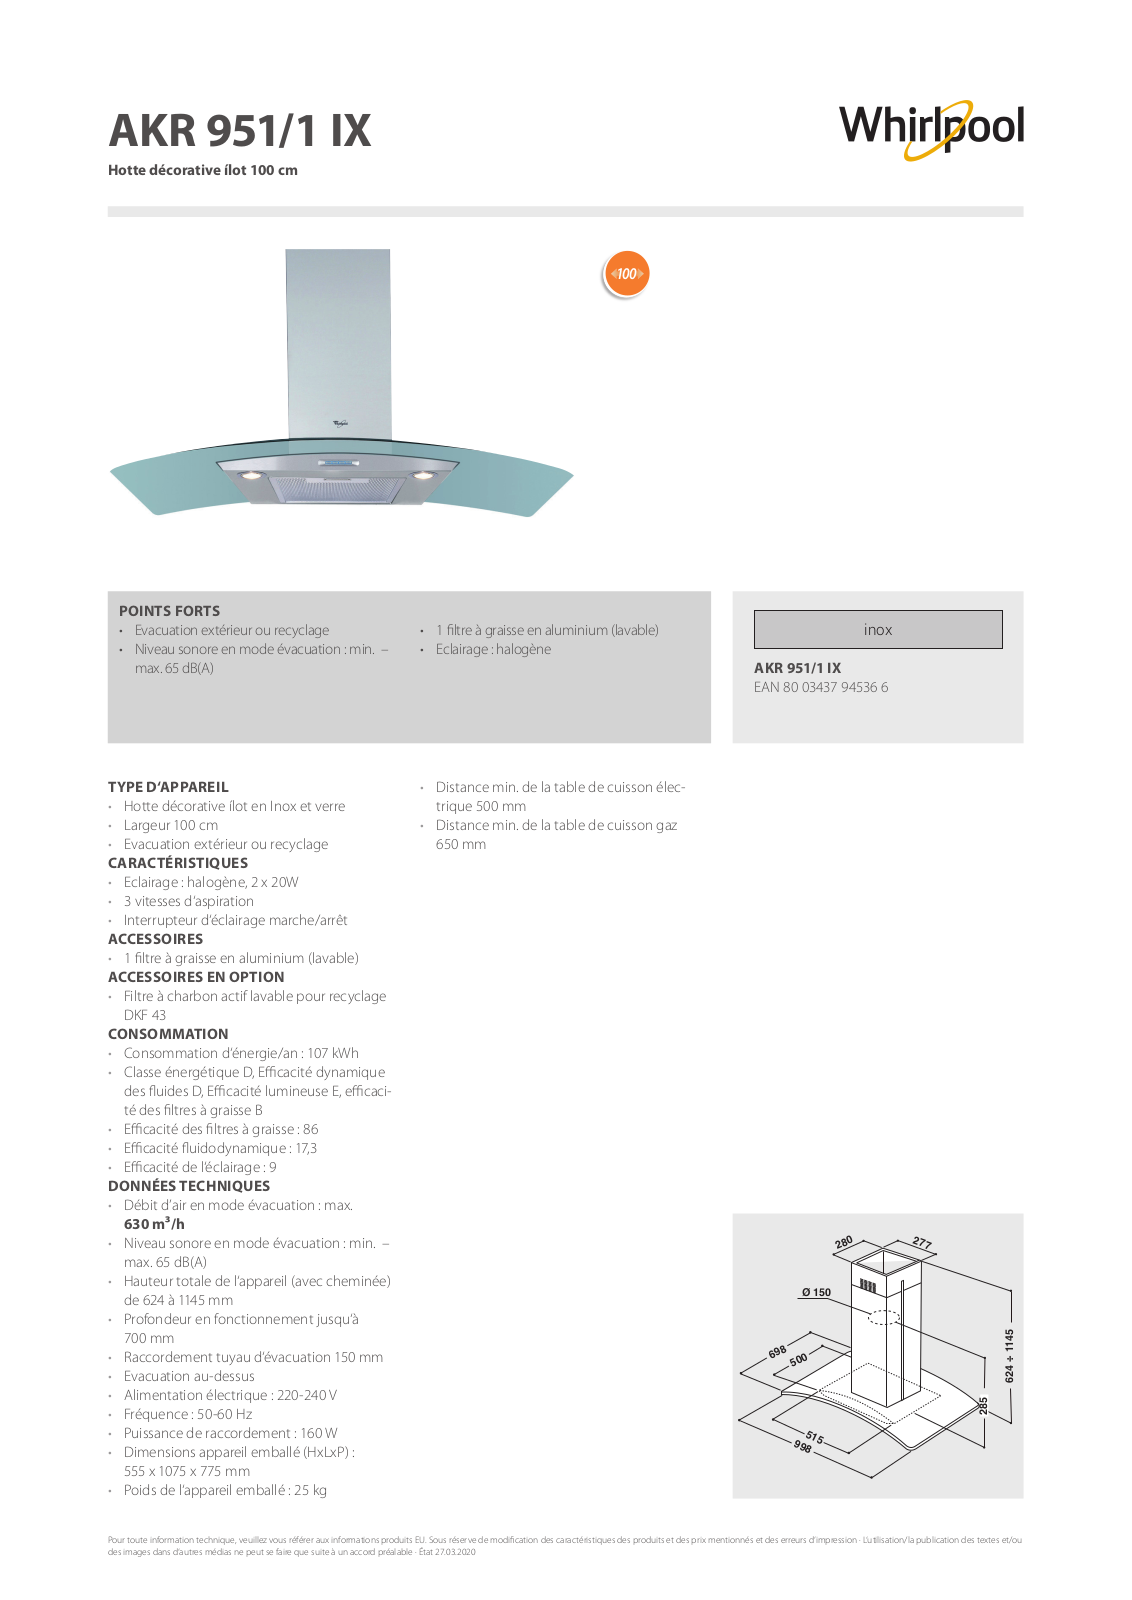 Whirlpool AKR 951/1 IX Product information